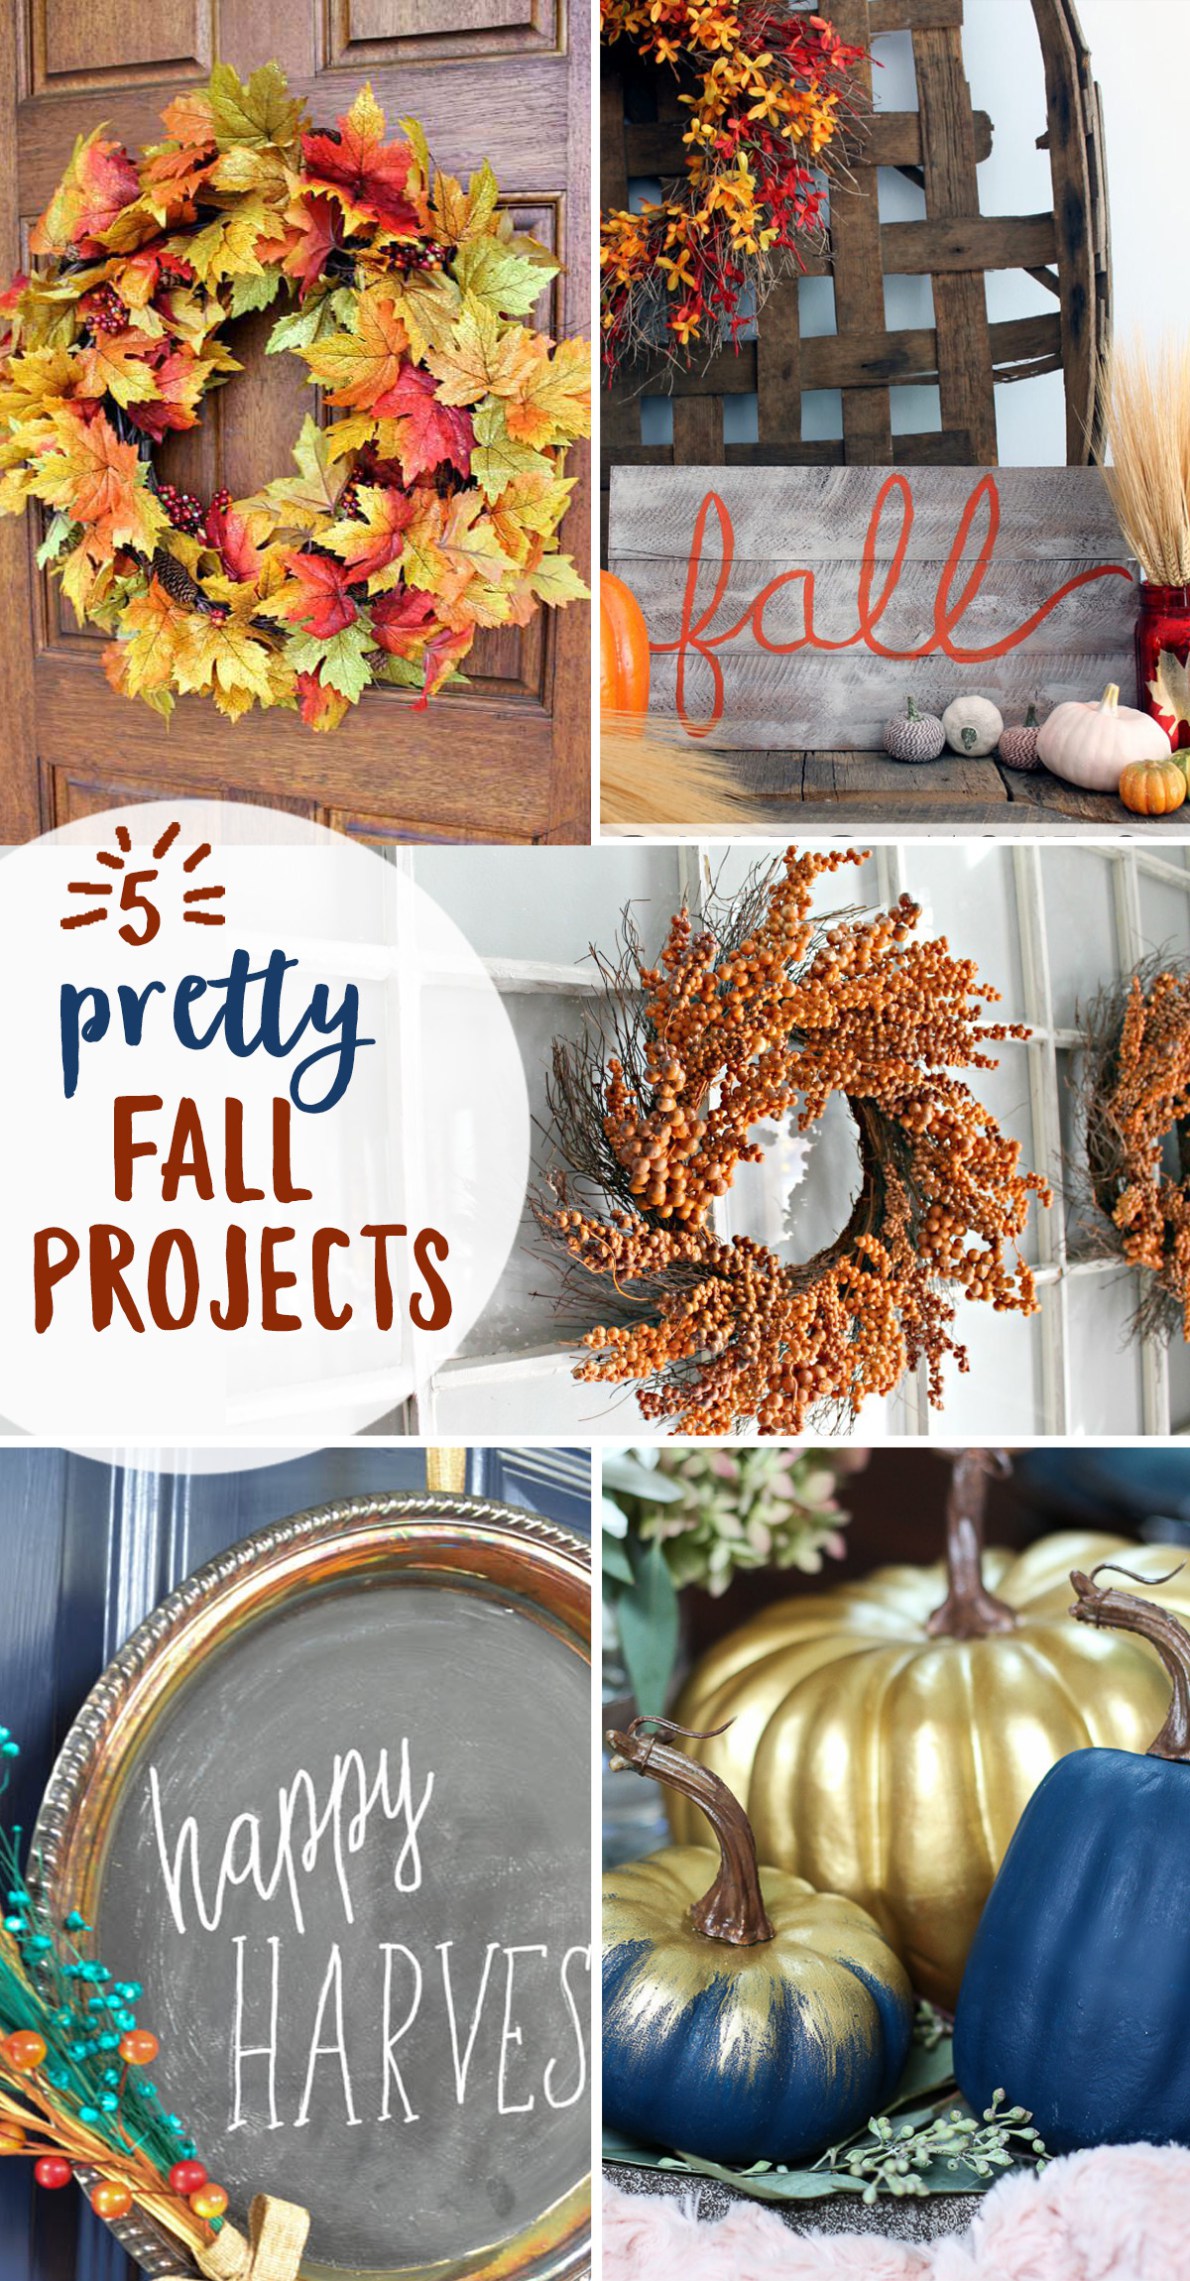 5 Pretty Little Fall Projects